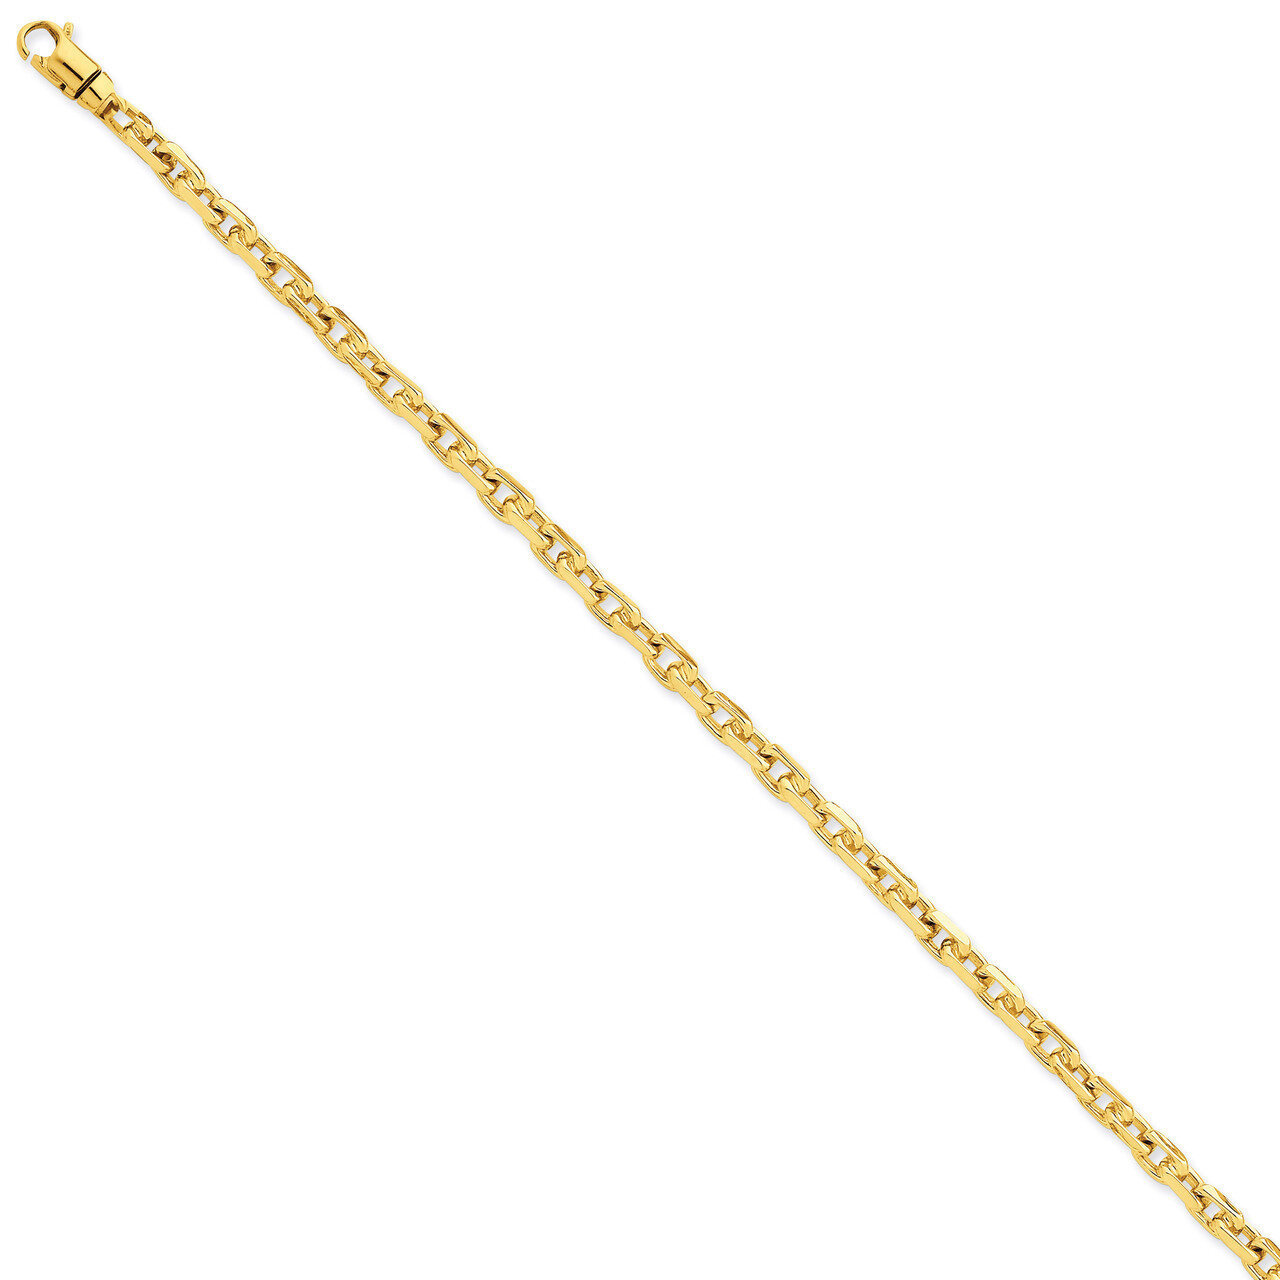 4.5mm Hand-Polished Fancy Link Chain 9 Inch 14k Gold LK302-9